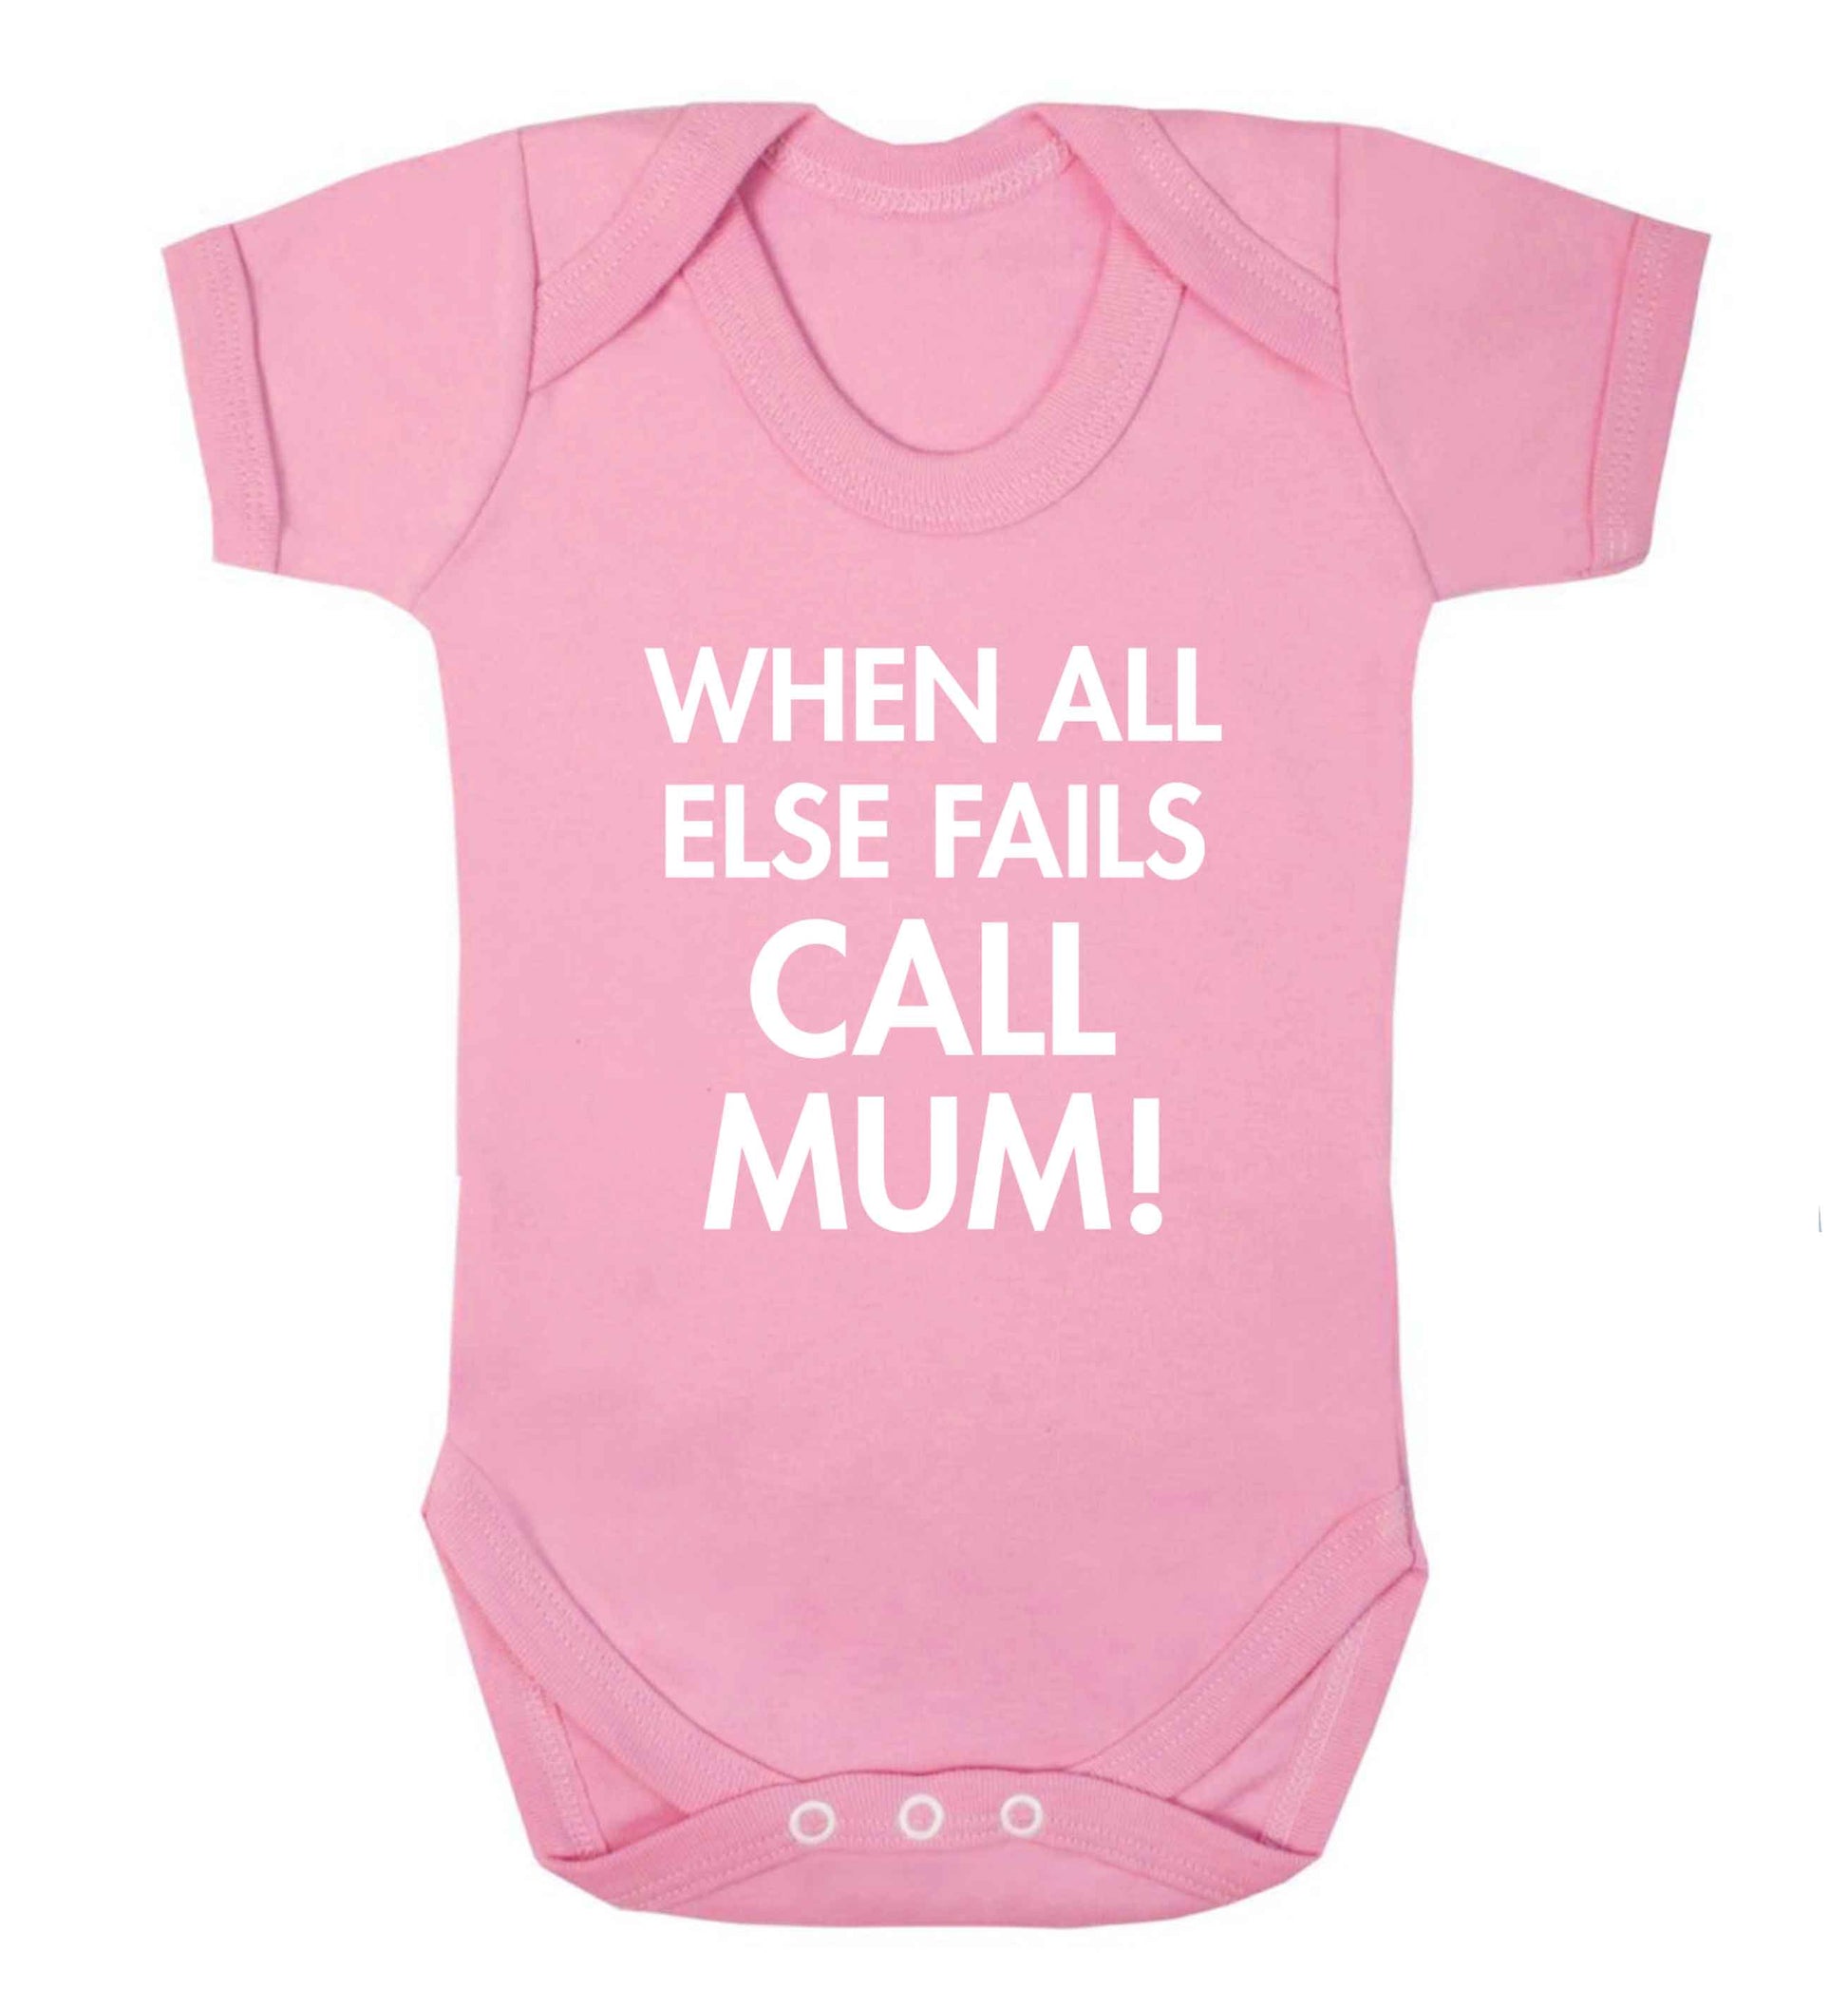 When all else fails call mum! baby vest pale pink 18-24 months